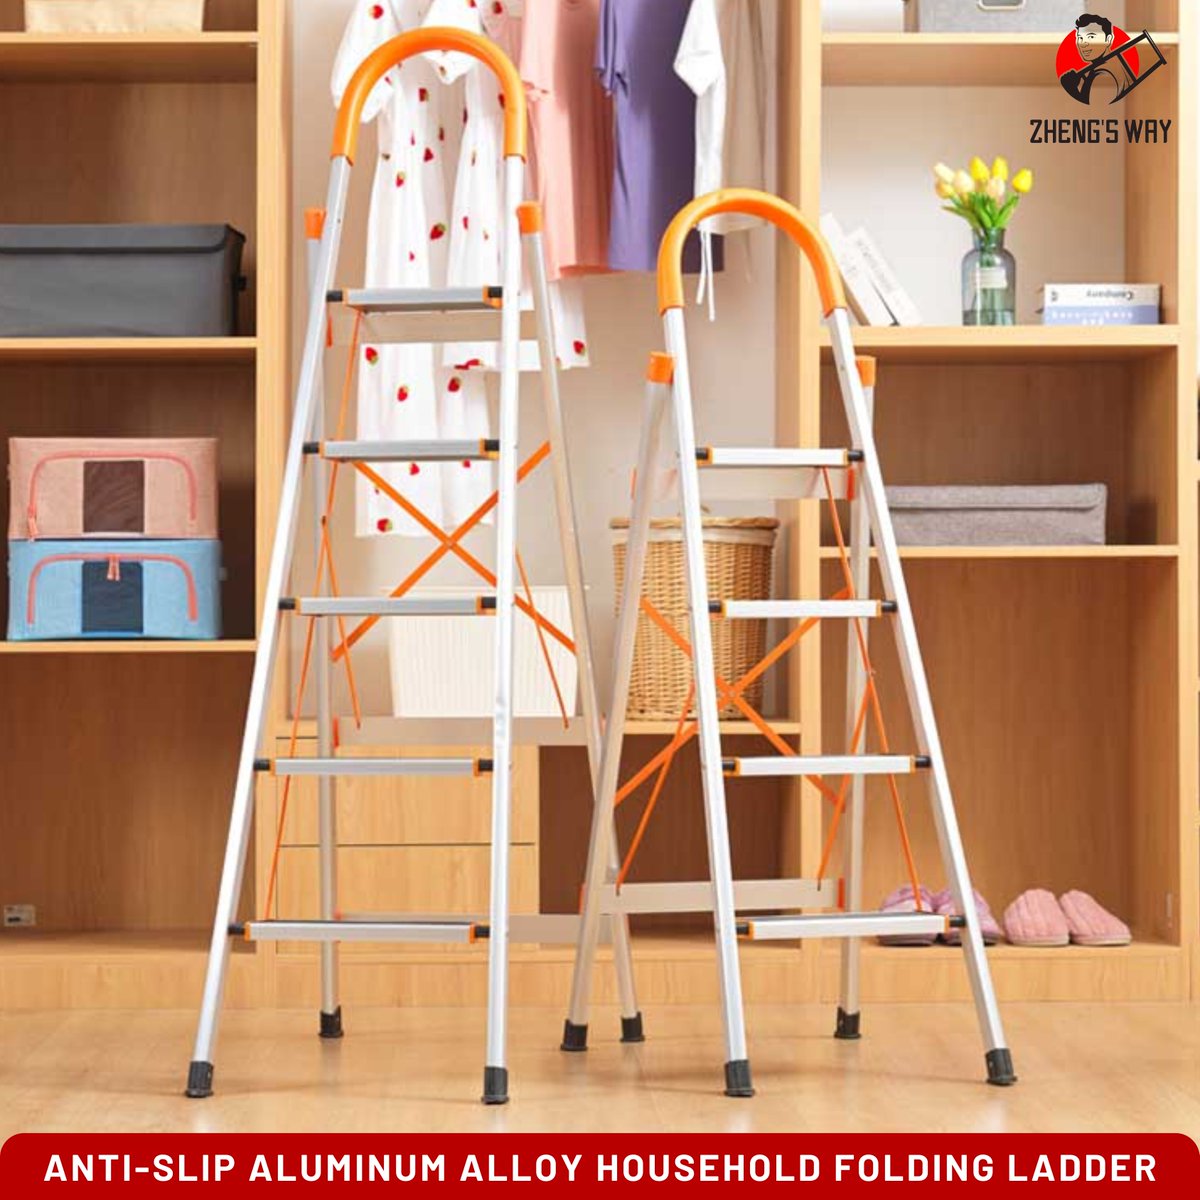 Say goodbye to slips and falls with our Anti-Slip Aluminum Alloy Household Folding Ladder! 
 
#antislipladder #homesafety #foldingladder #staysafe #b2b #manufacturing #wholesalevendors #ladderwholesaler #laddersupplier #laddermanufacturer #laddersafety #zhengsway